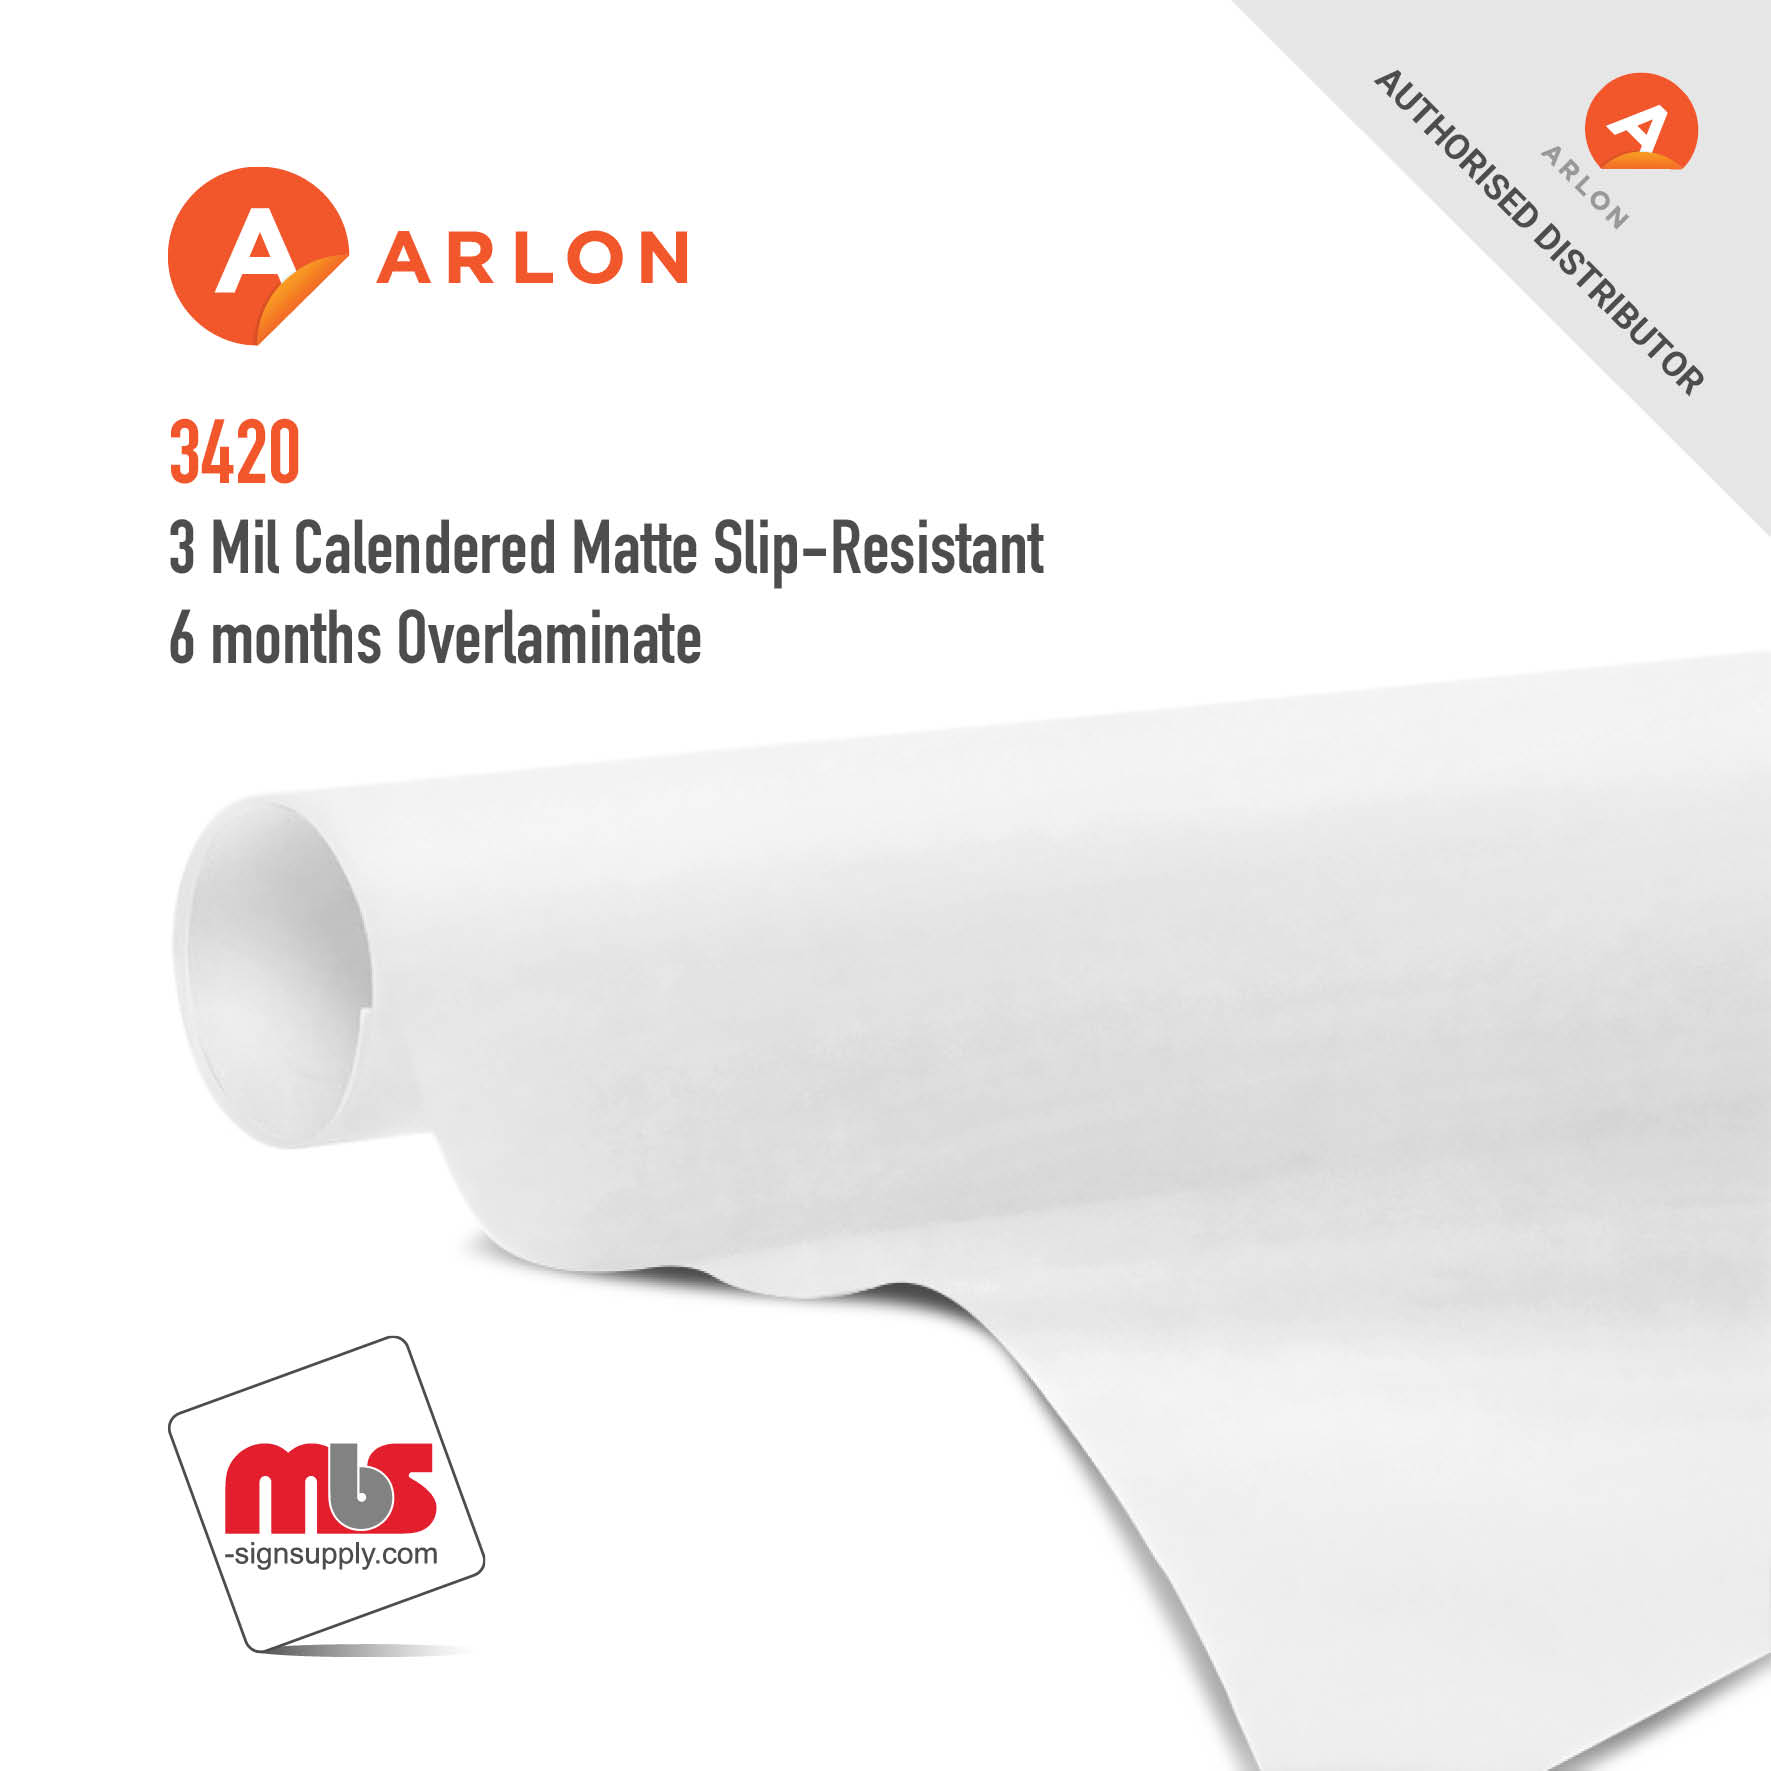 54'' x 50 Yard Roll - Arlon 3420 3 Mil Calendered Matte Slip-Resistant 6 months Overlaminate